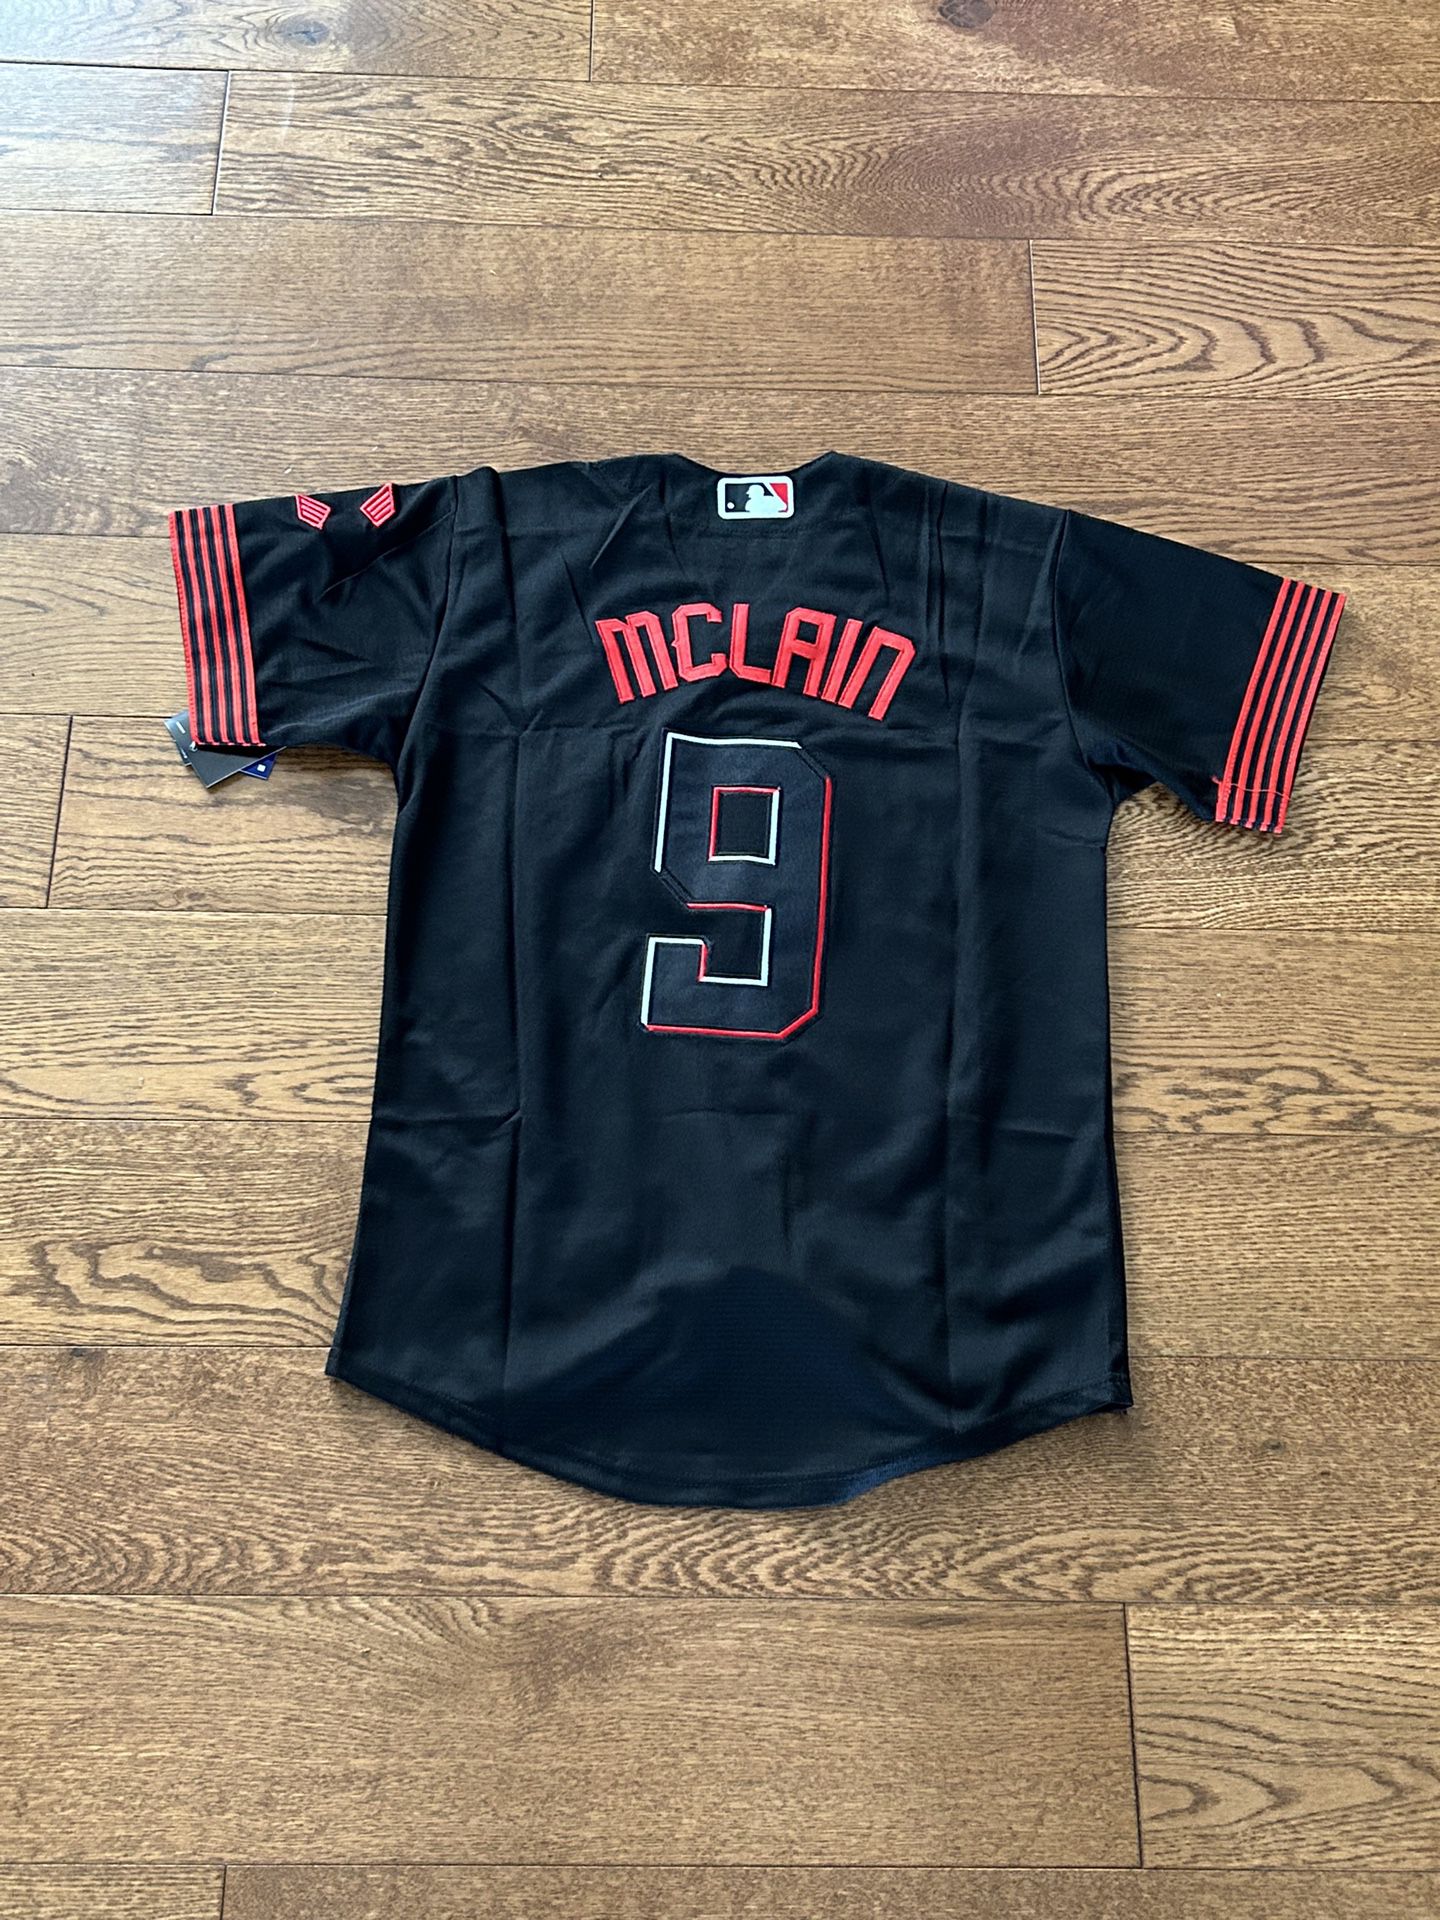 Brand New Matt McLain Jersey Cincinnati Reds YOUTH for Sale in Celina, OH -  OfferUp